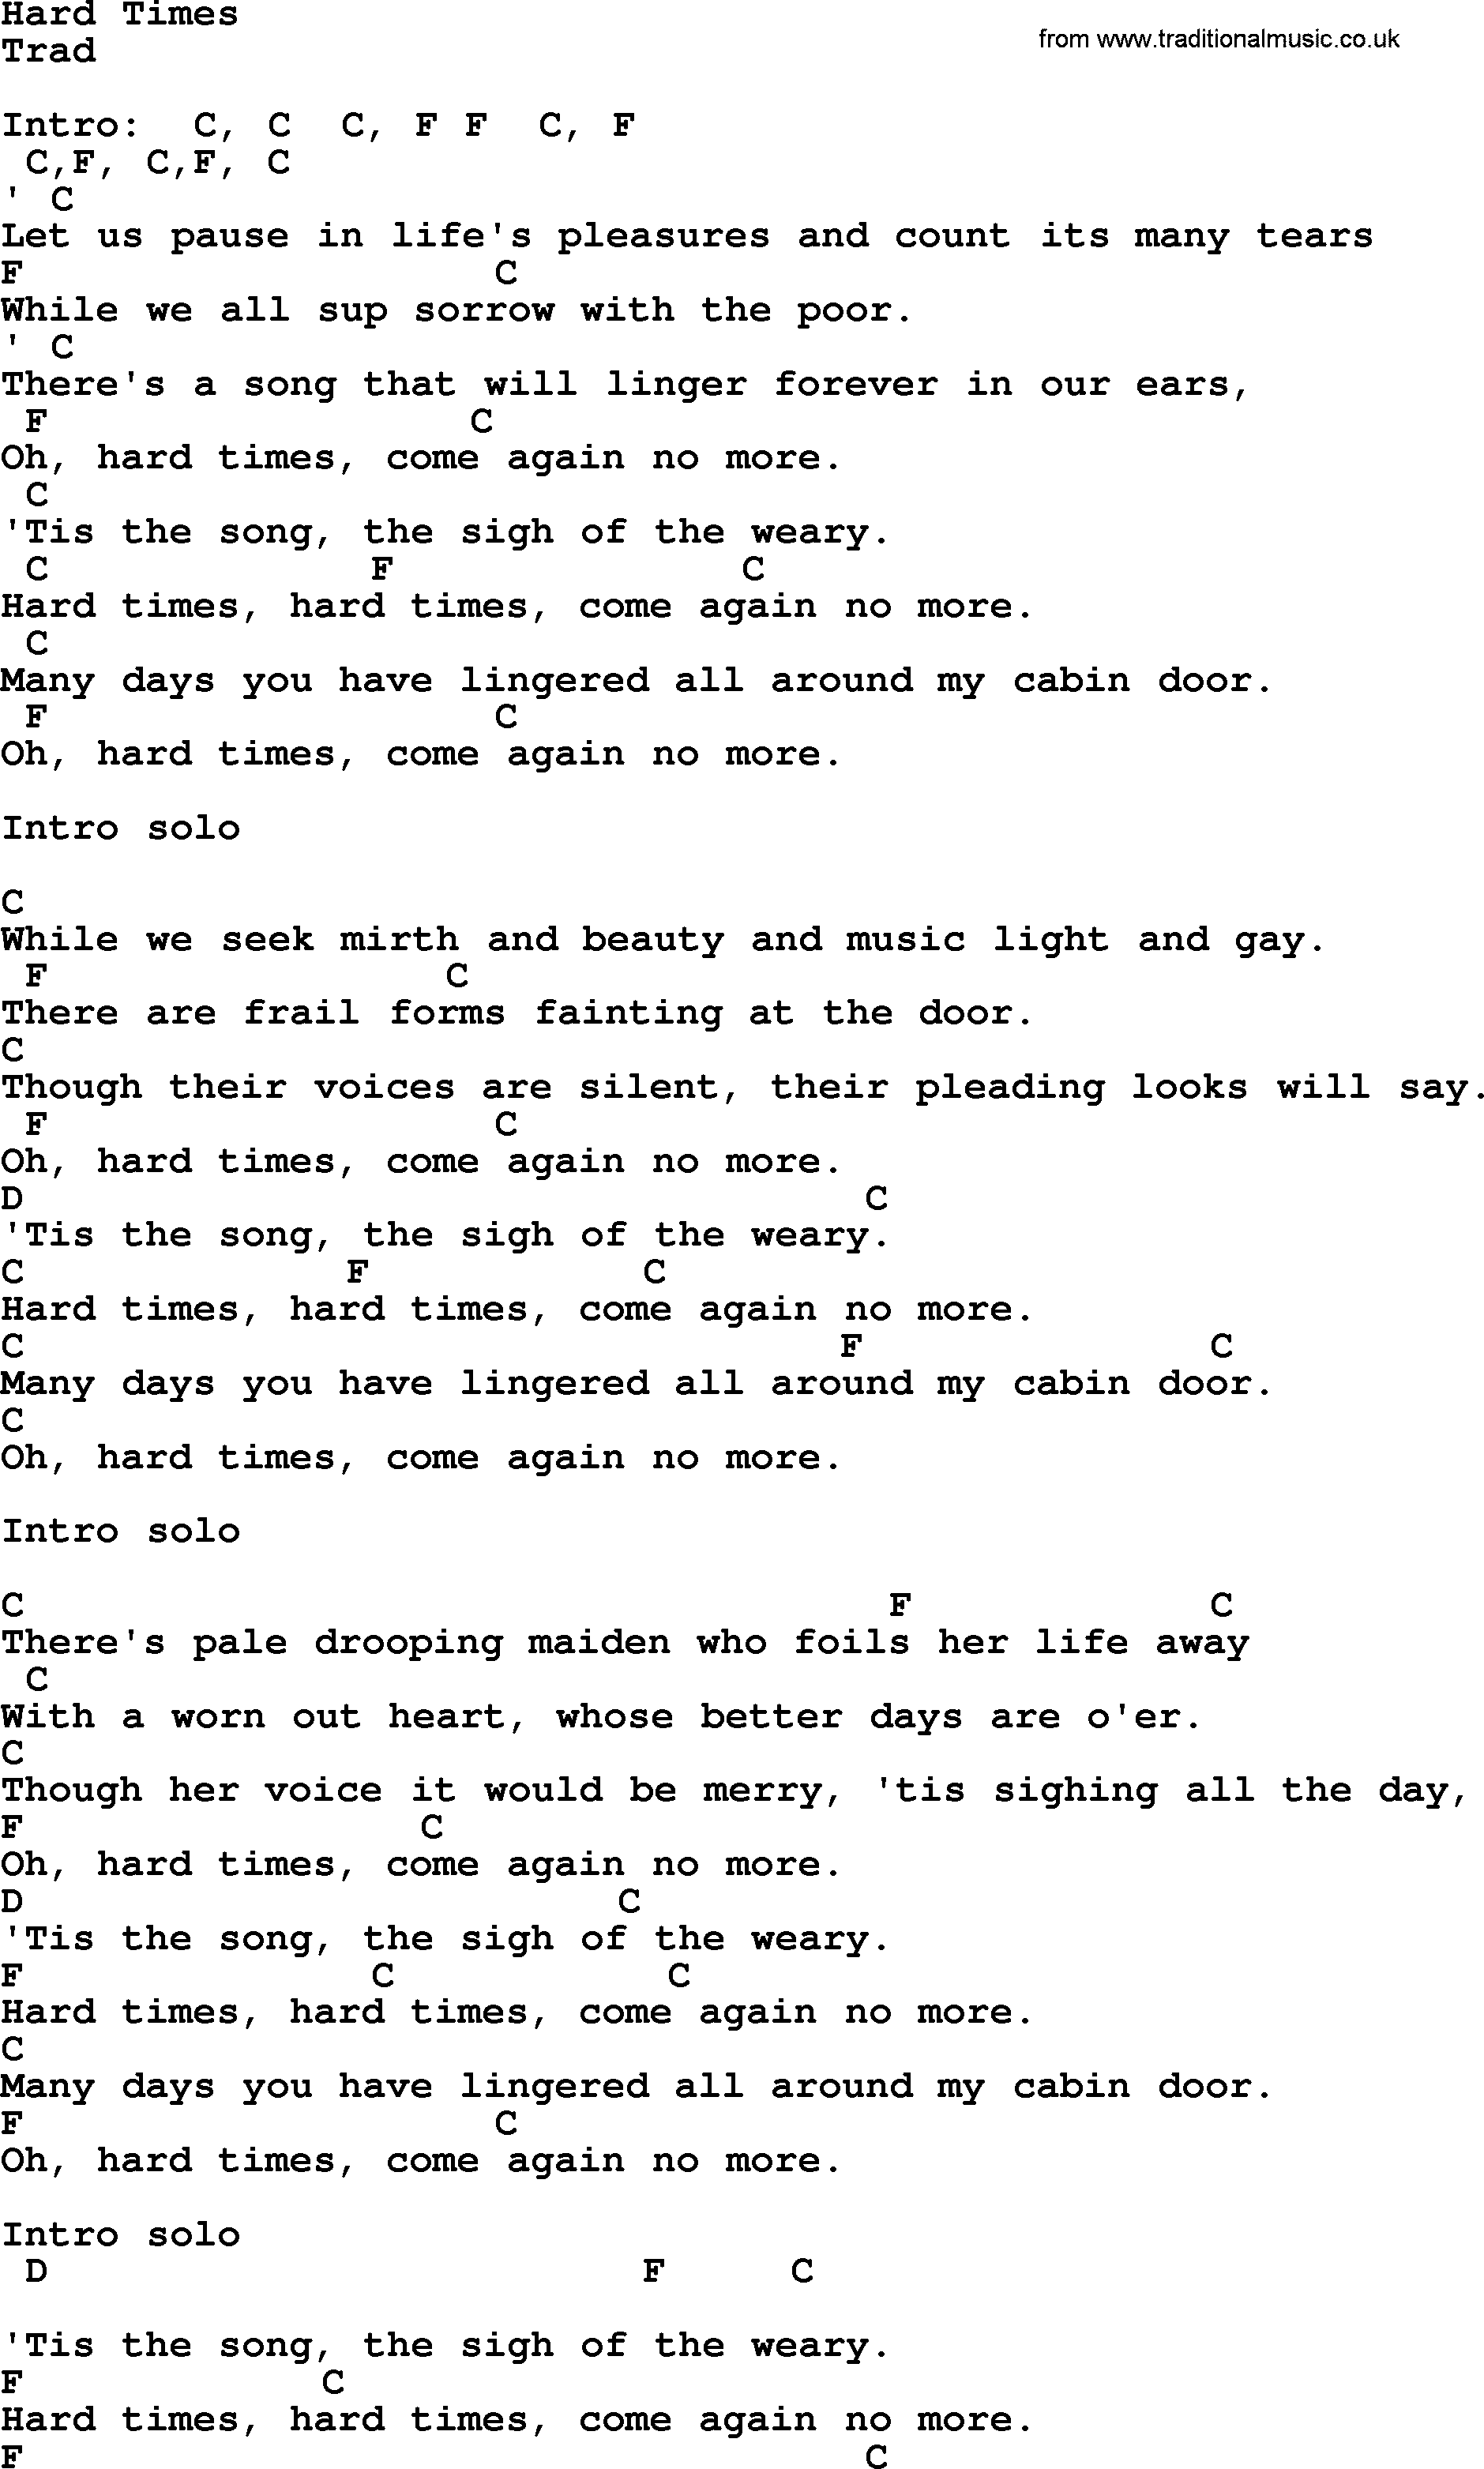 Johnny Cash song Hard Times, lyrics and chords